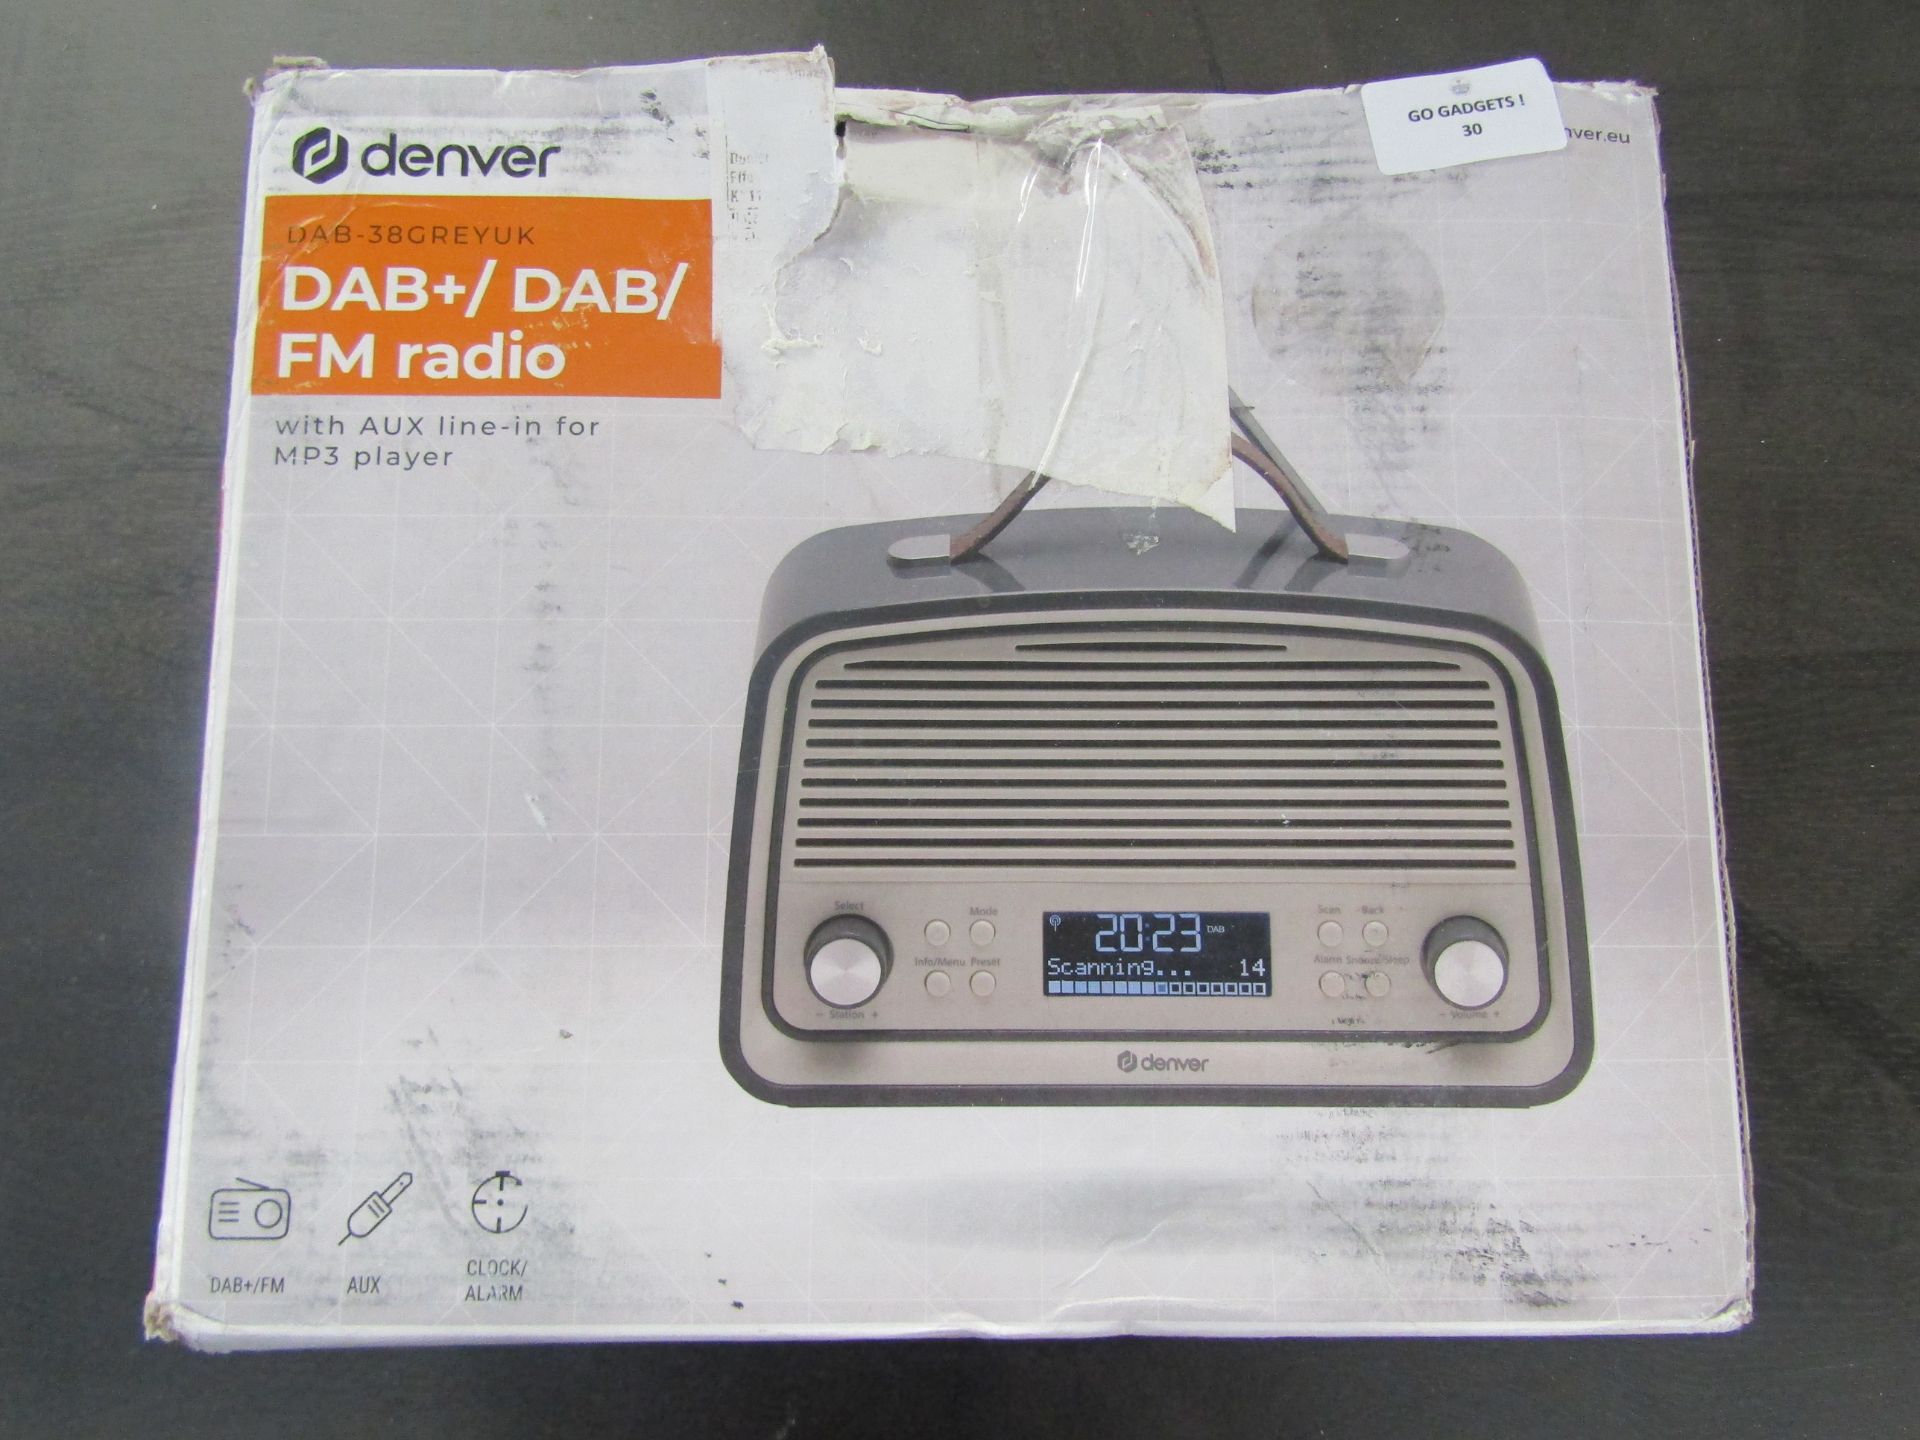 Denver DAB-38 Retro DAB/DAB+ Digital & FM Portable Radio Alarm Clock - Battery/Mains Powered with